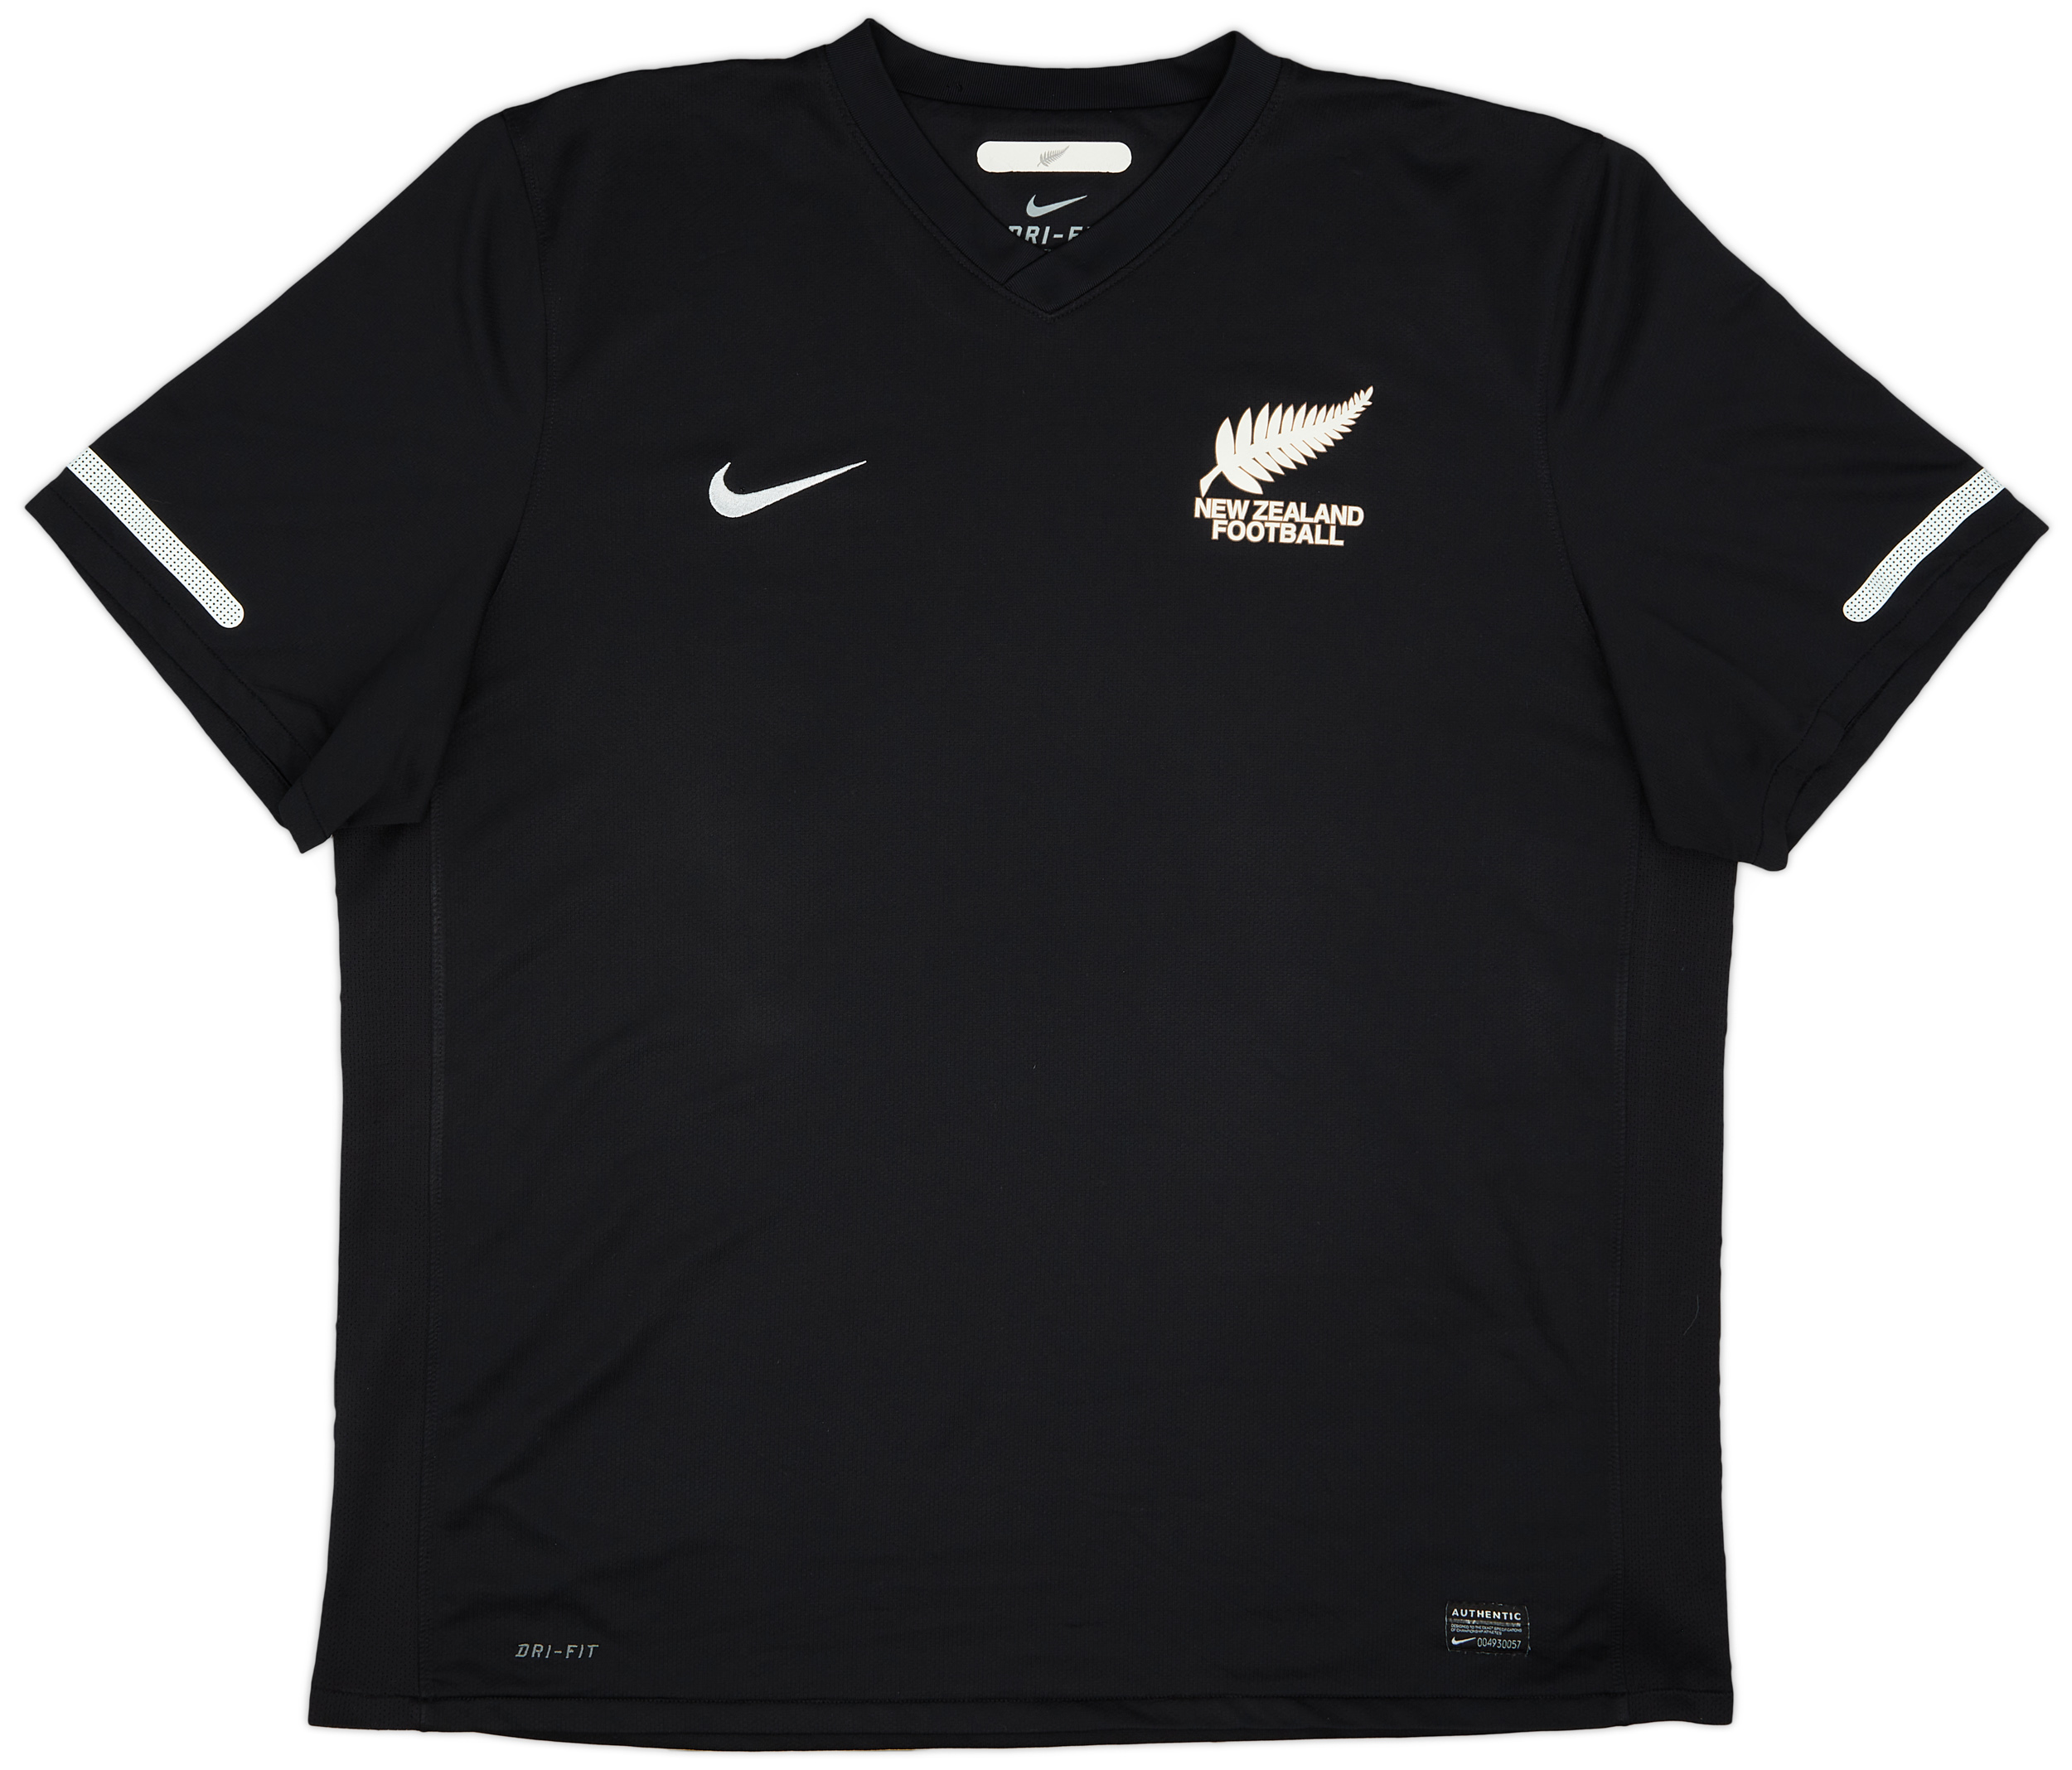 New Zealand  Fora camisa (Original)